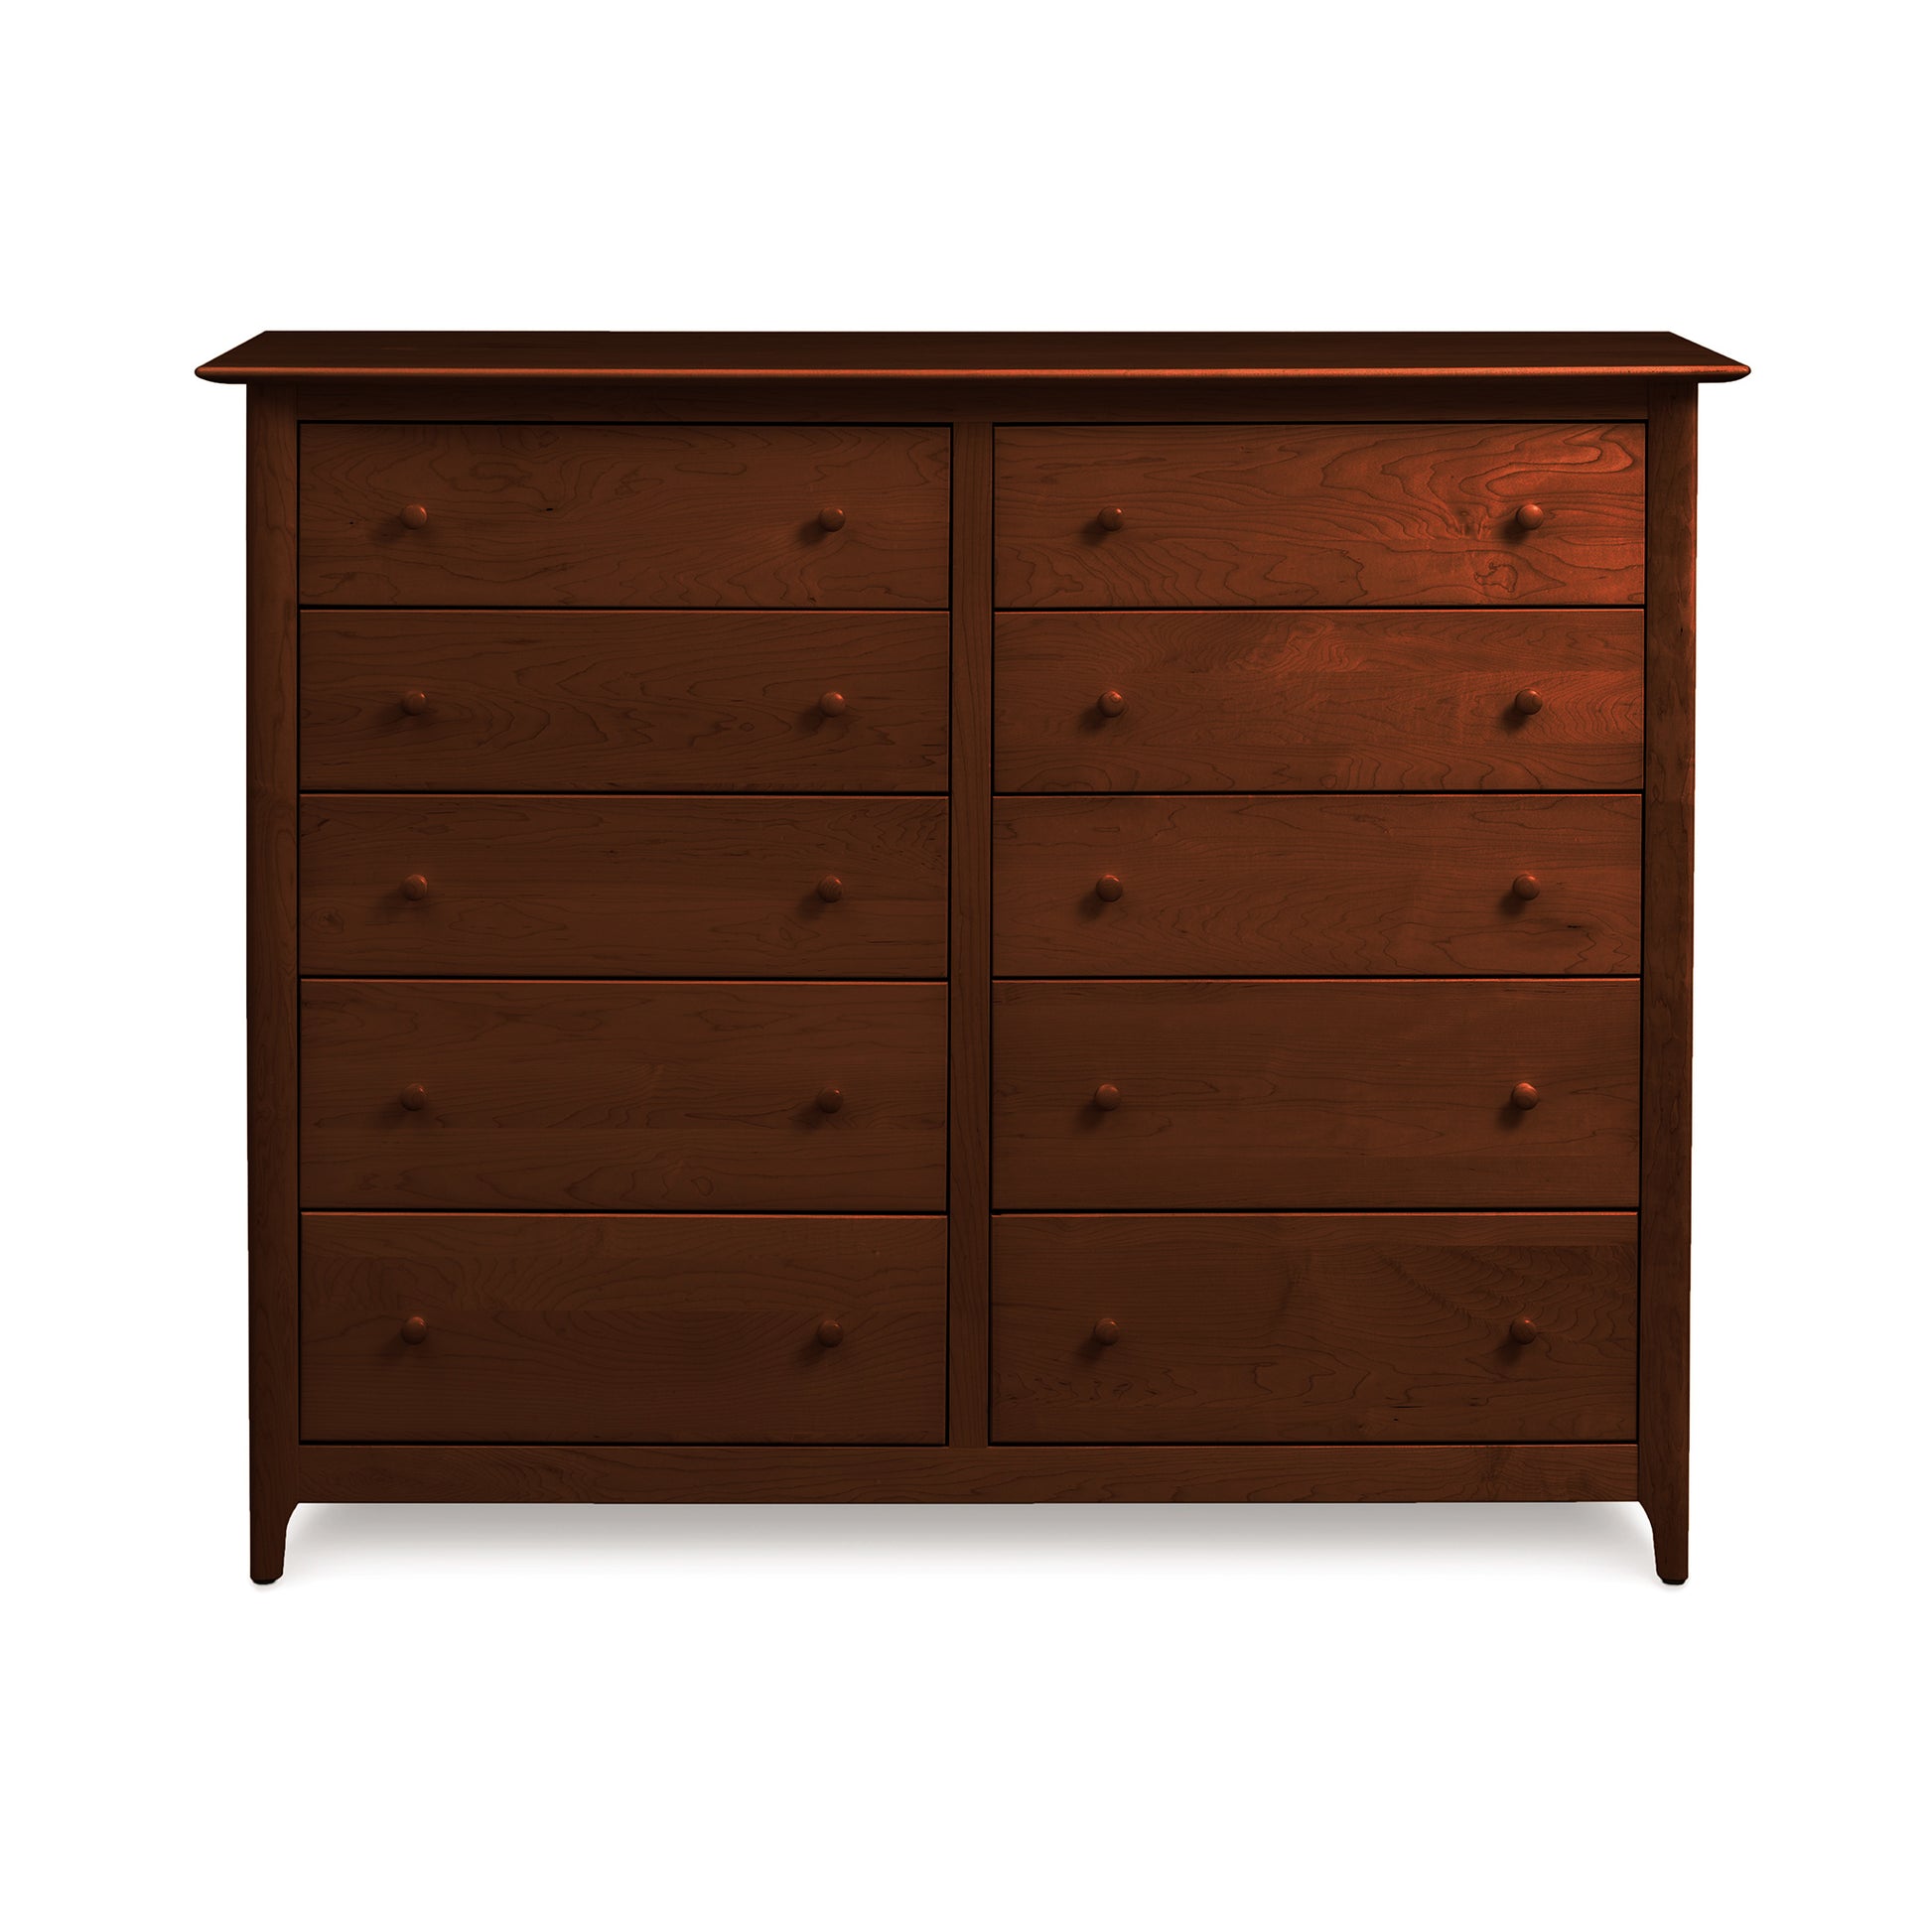 An image of a Copeland Furniture Sarah 10-Drawer Dresser.